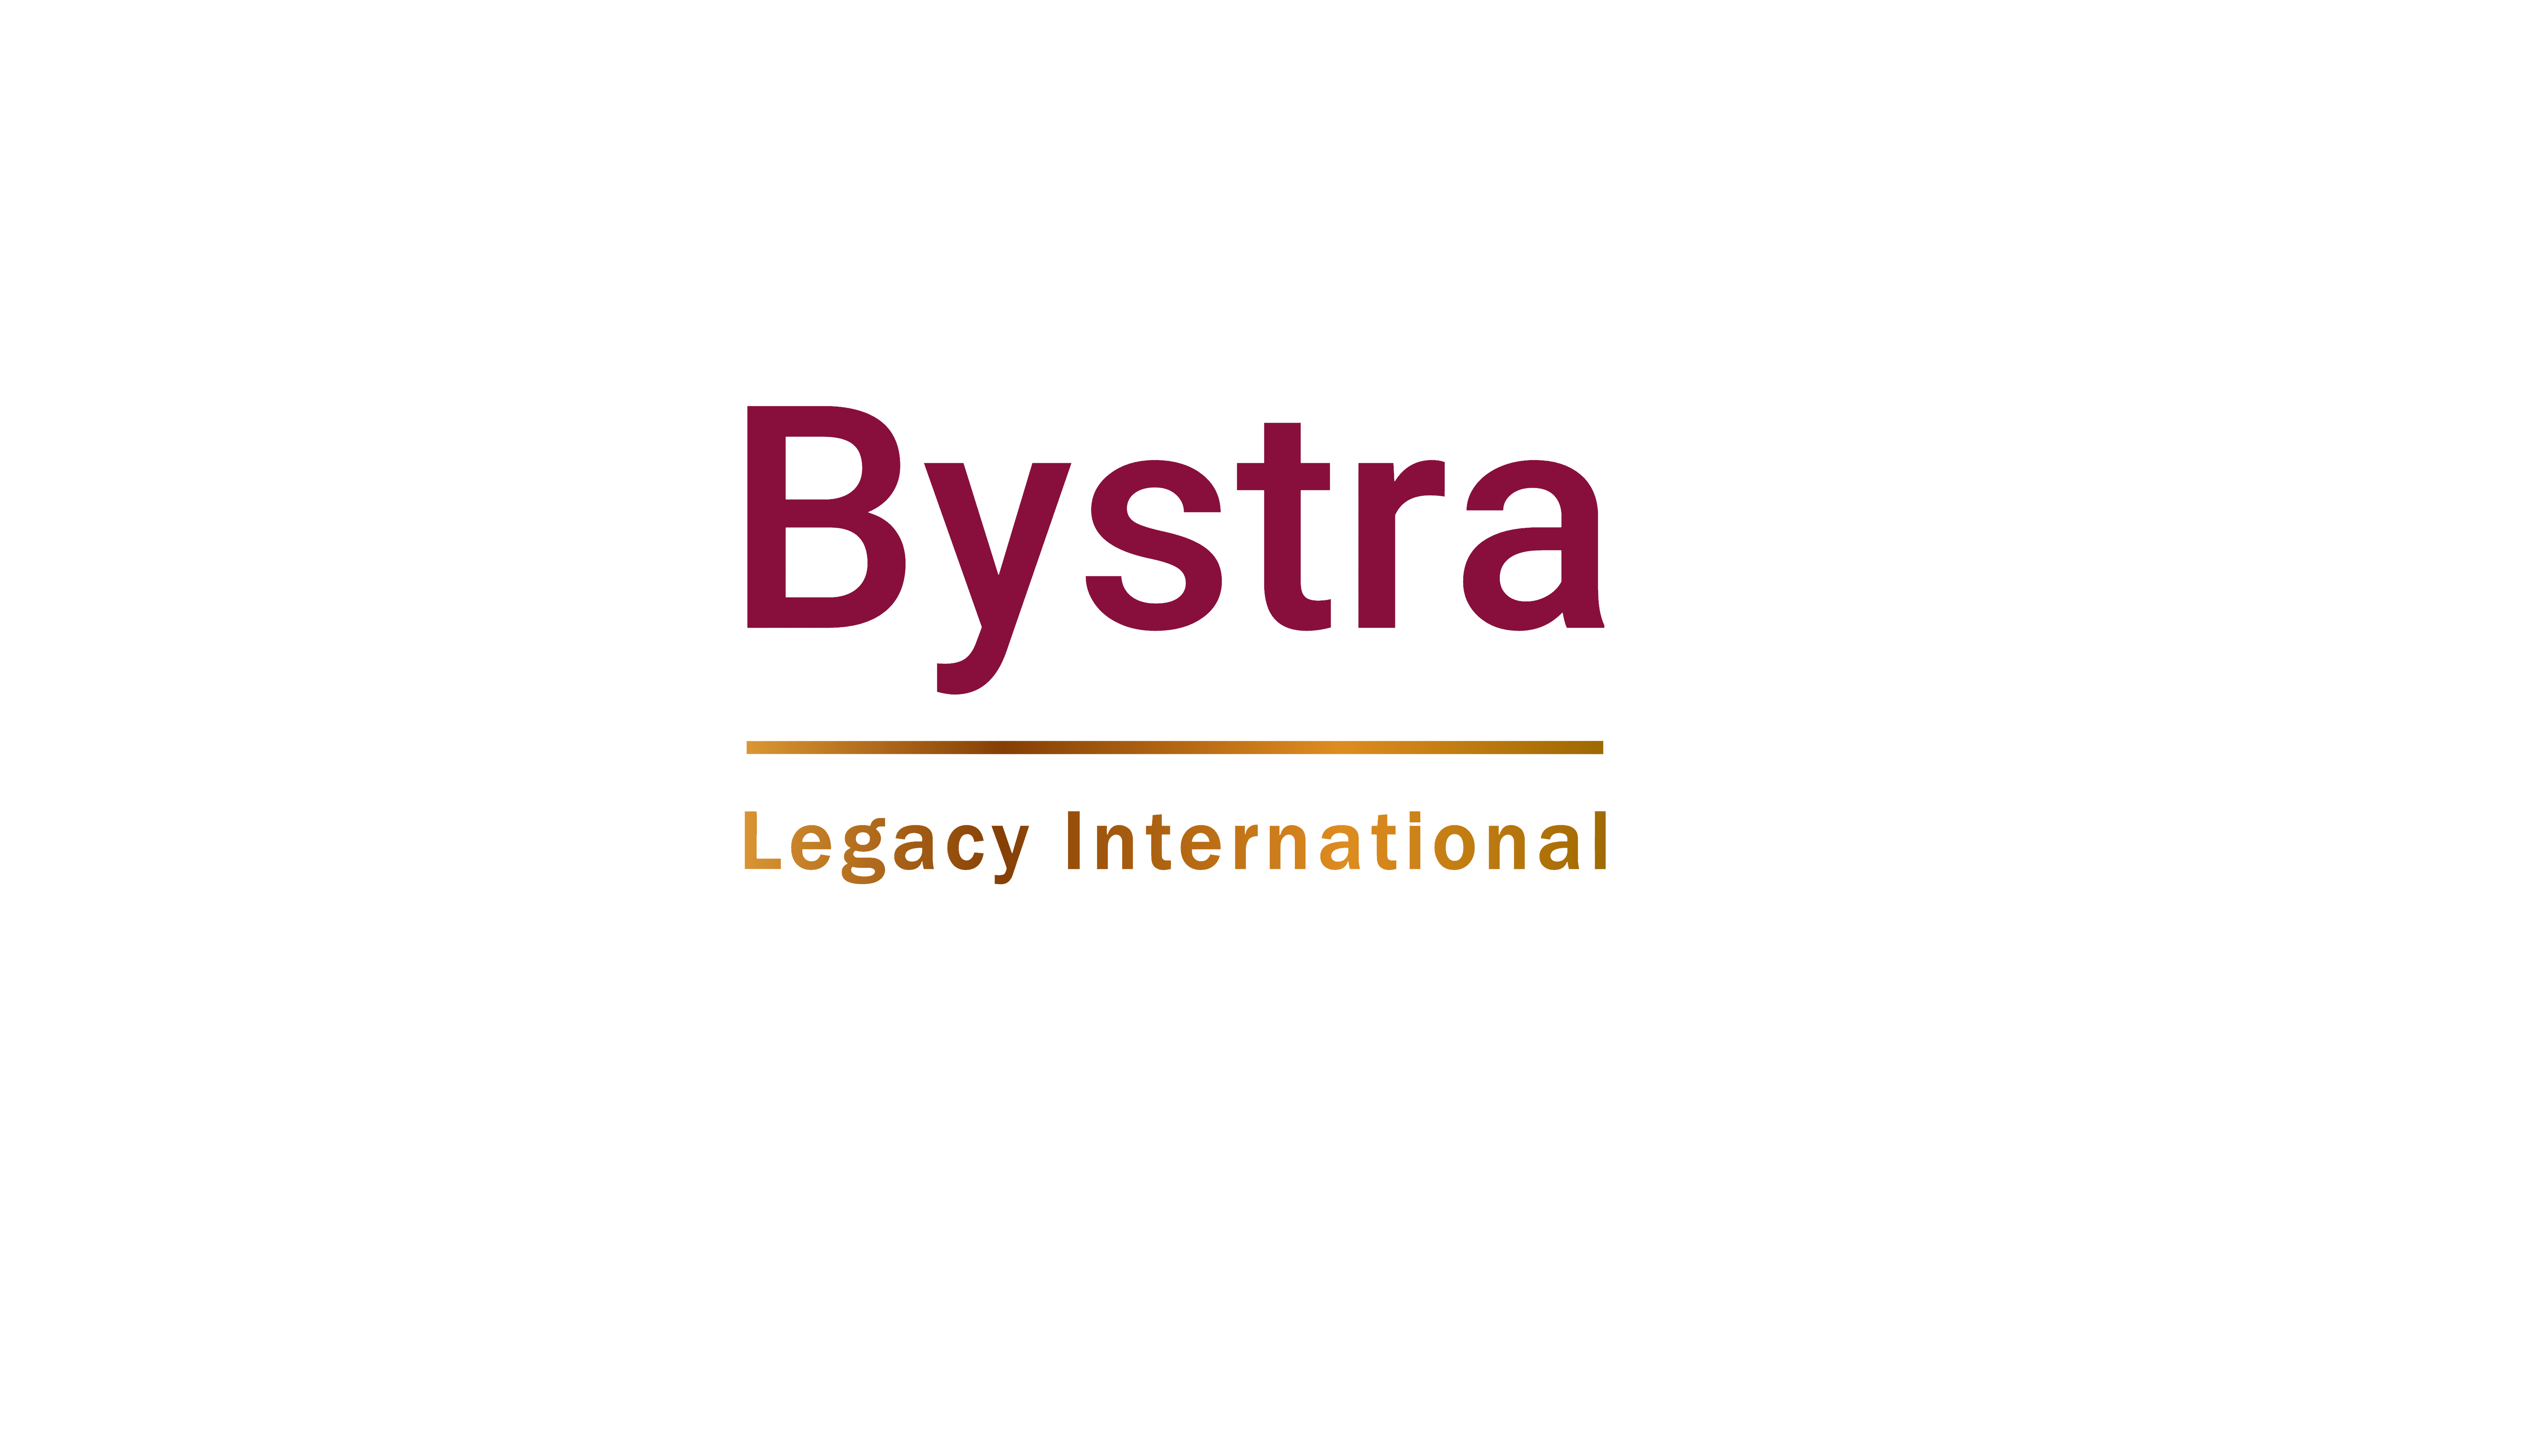 Bystra legacy